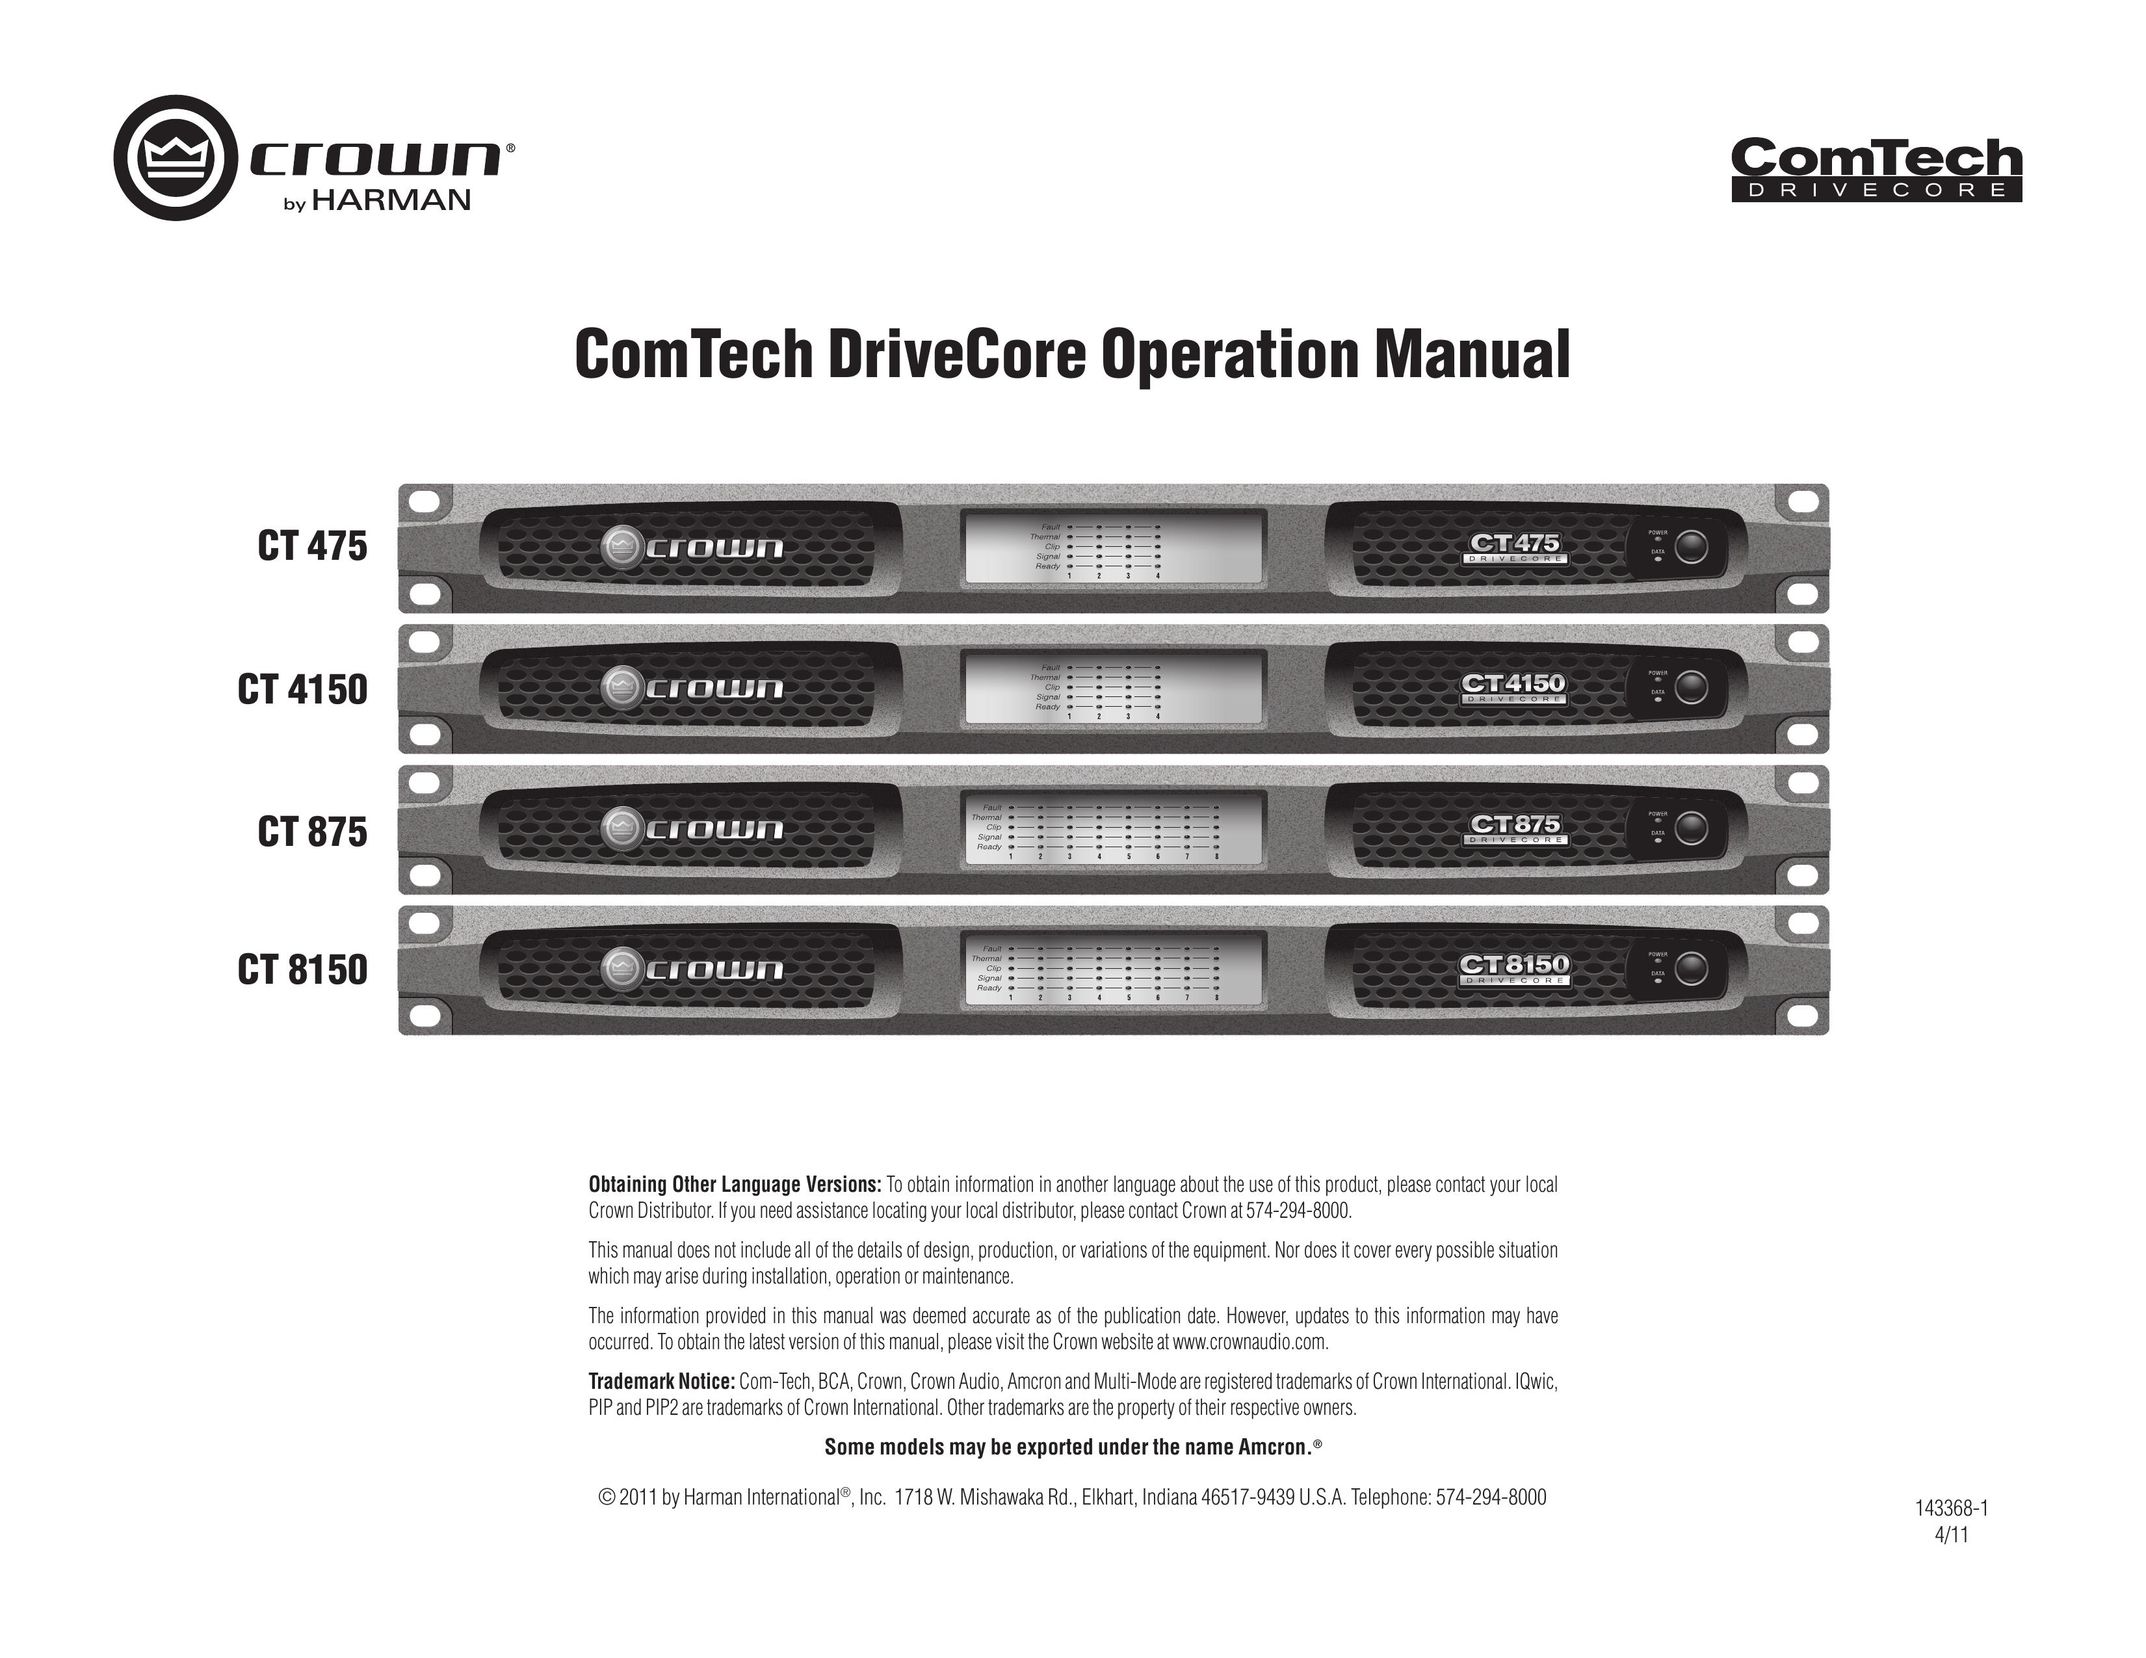 Crown CT 8150 Computer Hardware User Manual